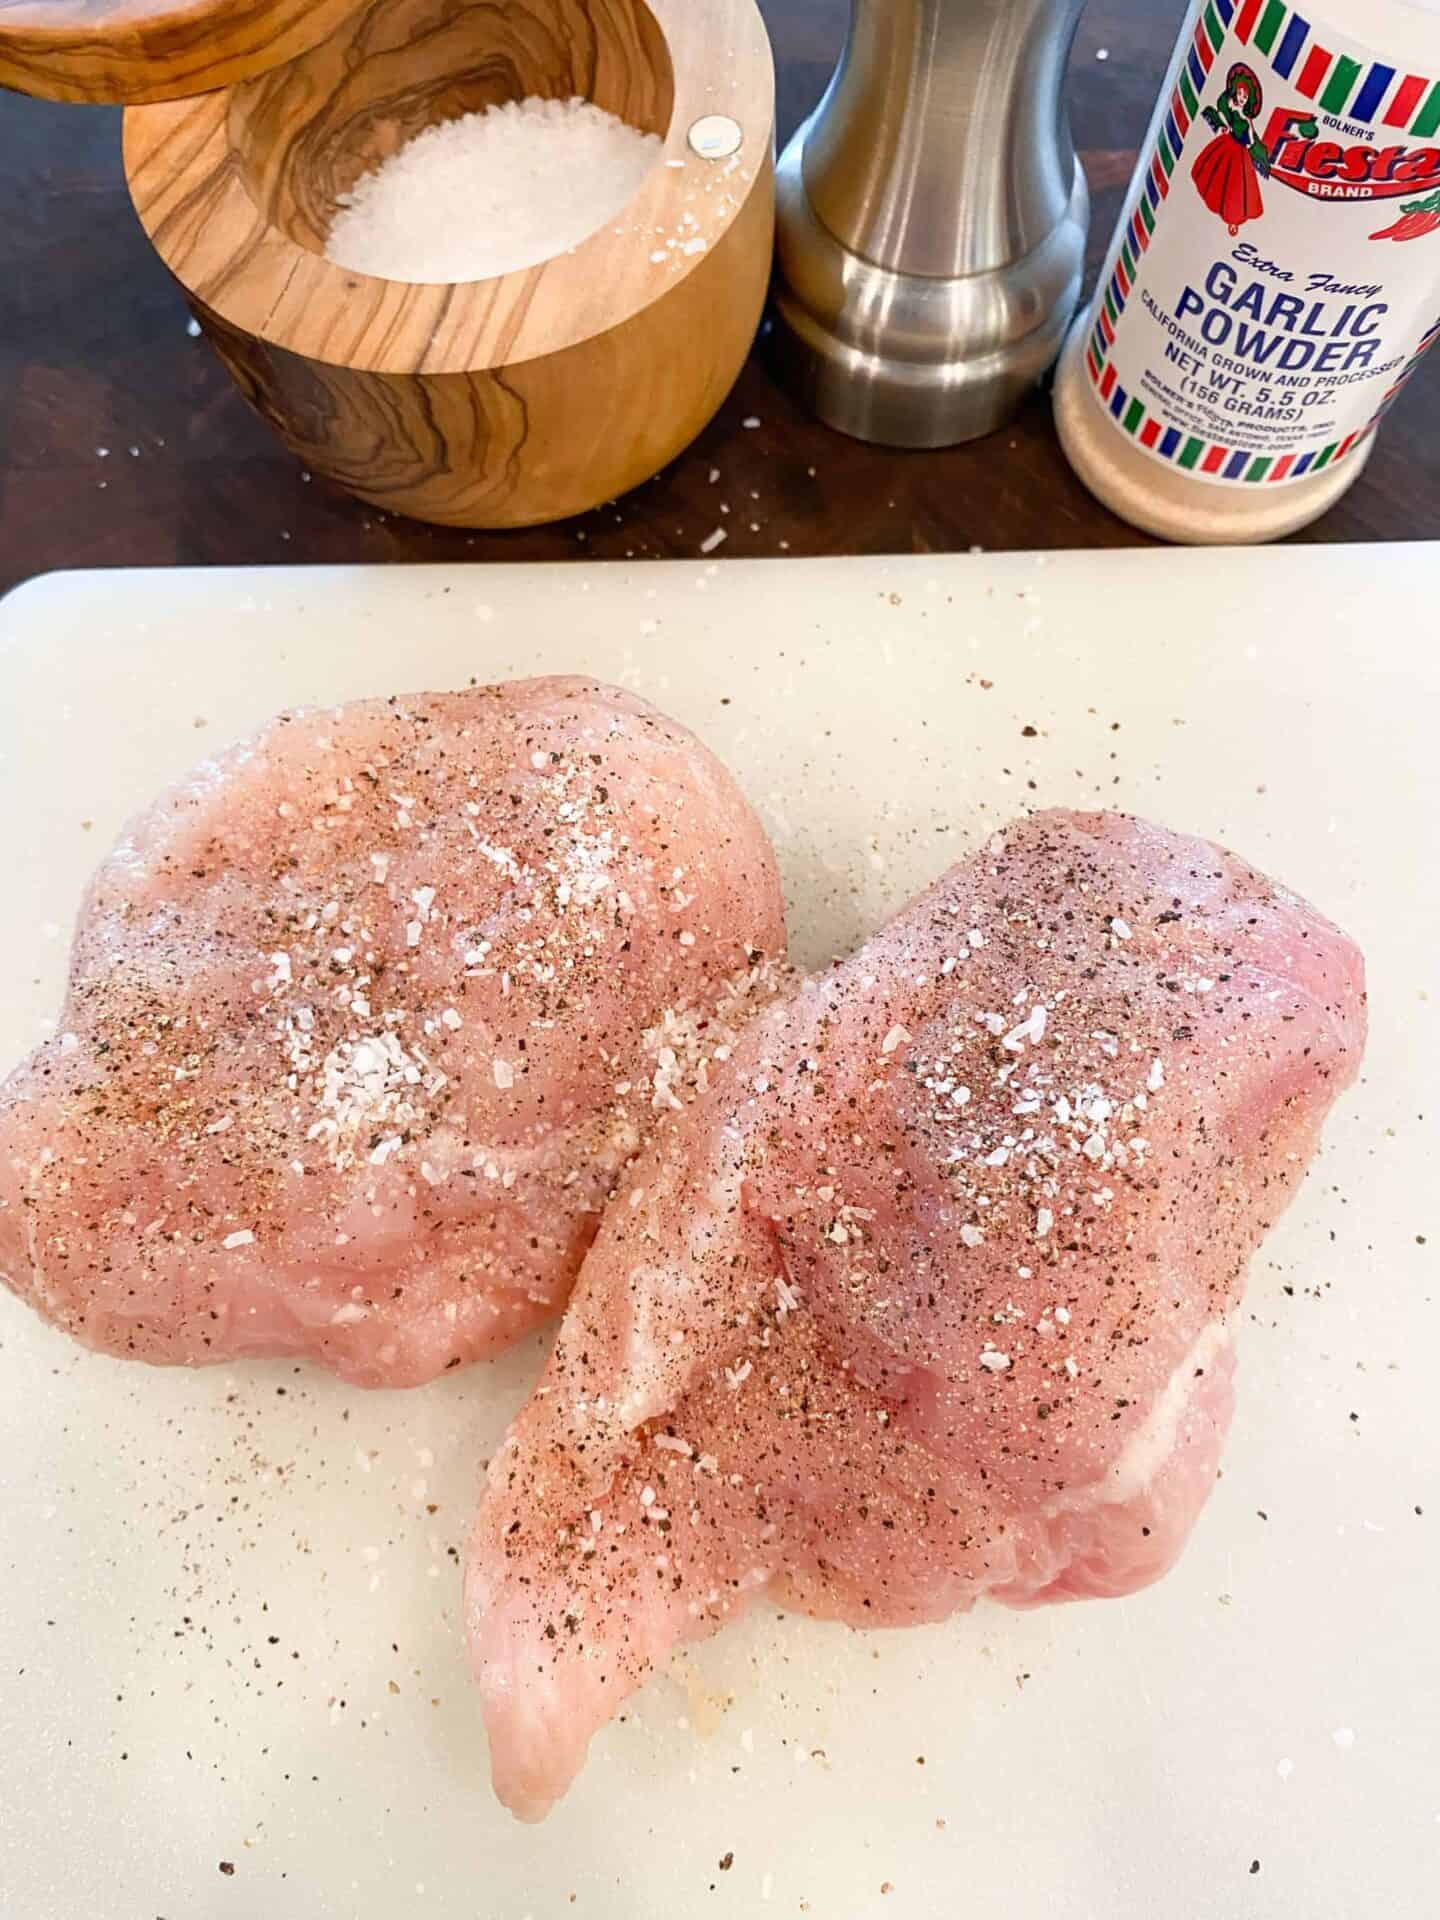 season-both-sides-of-chicken-breast-with-salt-pepper-and-garlic-powder